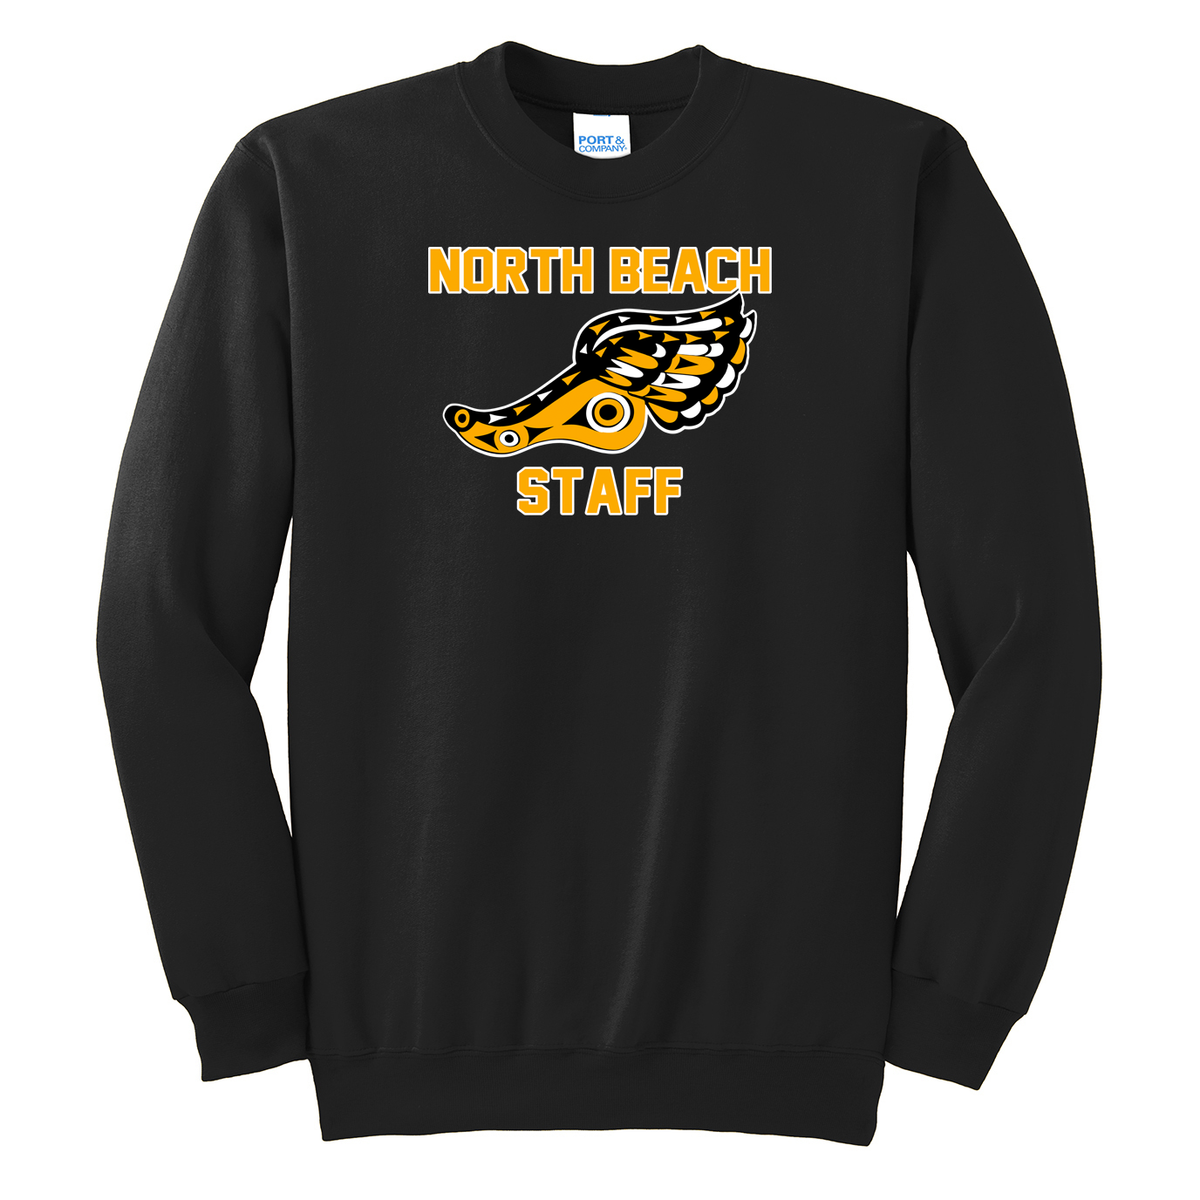 North Beach Staff Crew Neck Sweater